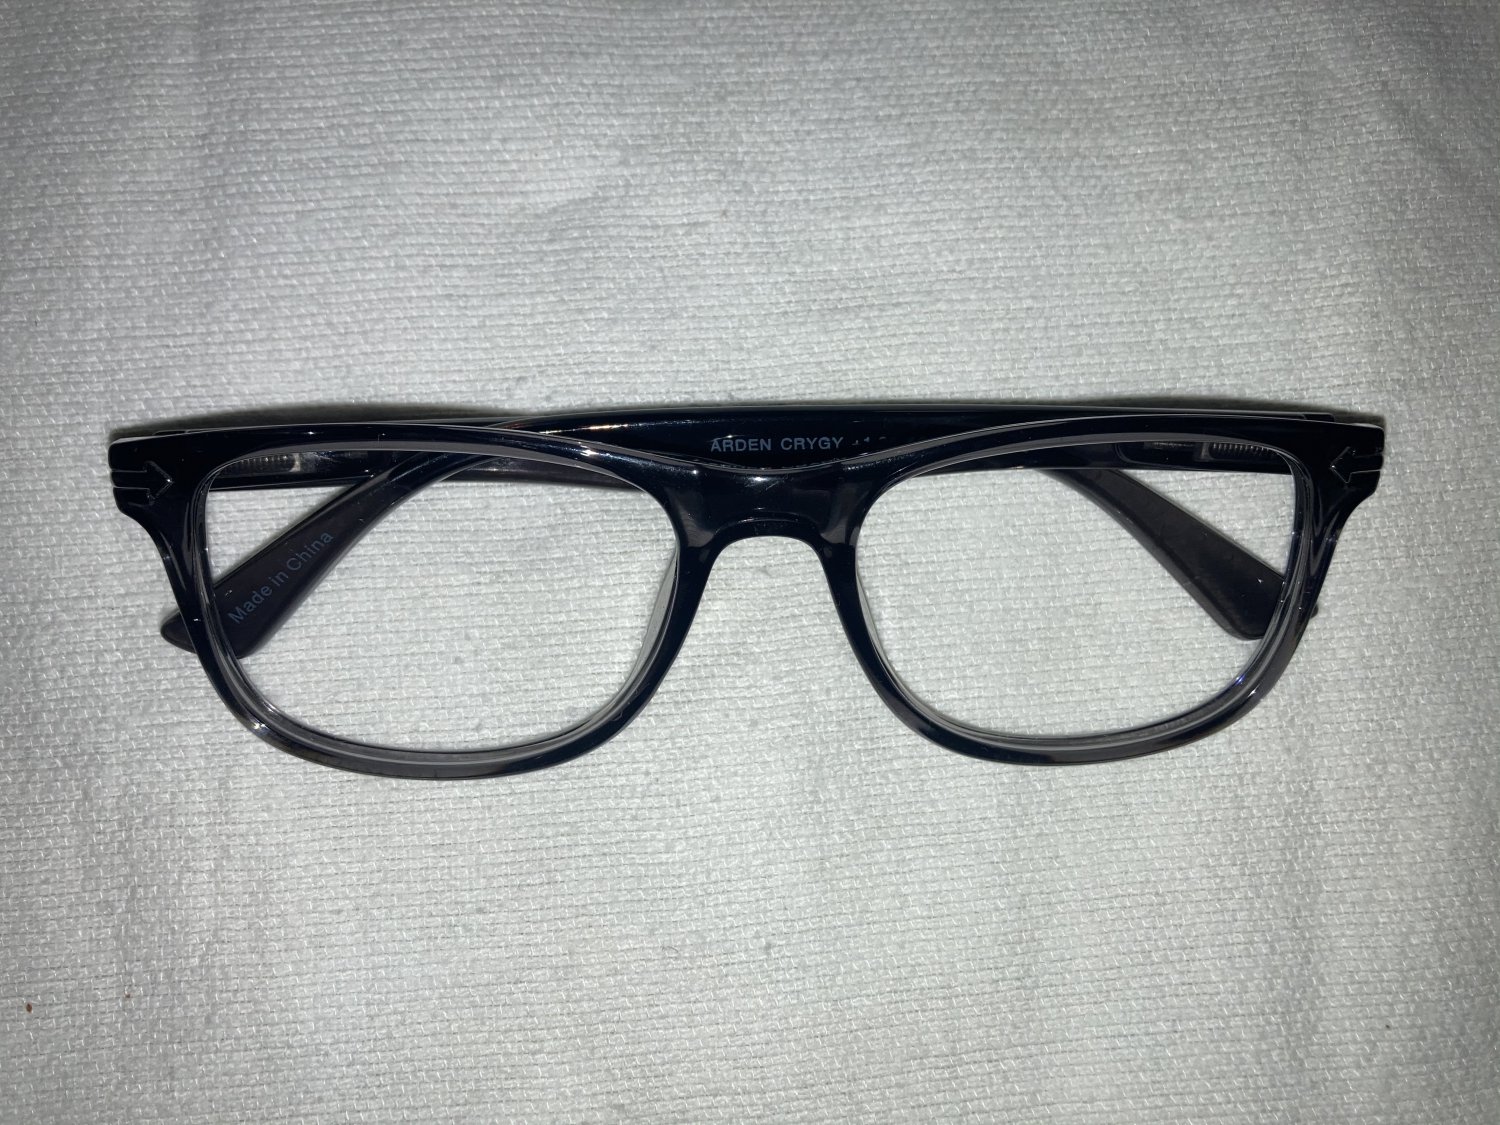 Arden Crygy Eyeglasses Glasses Frame Only. Great Find